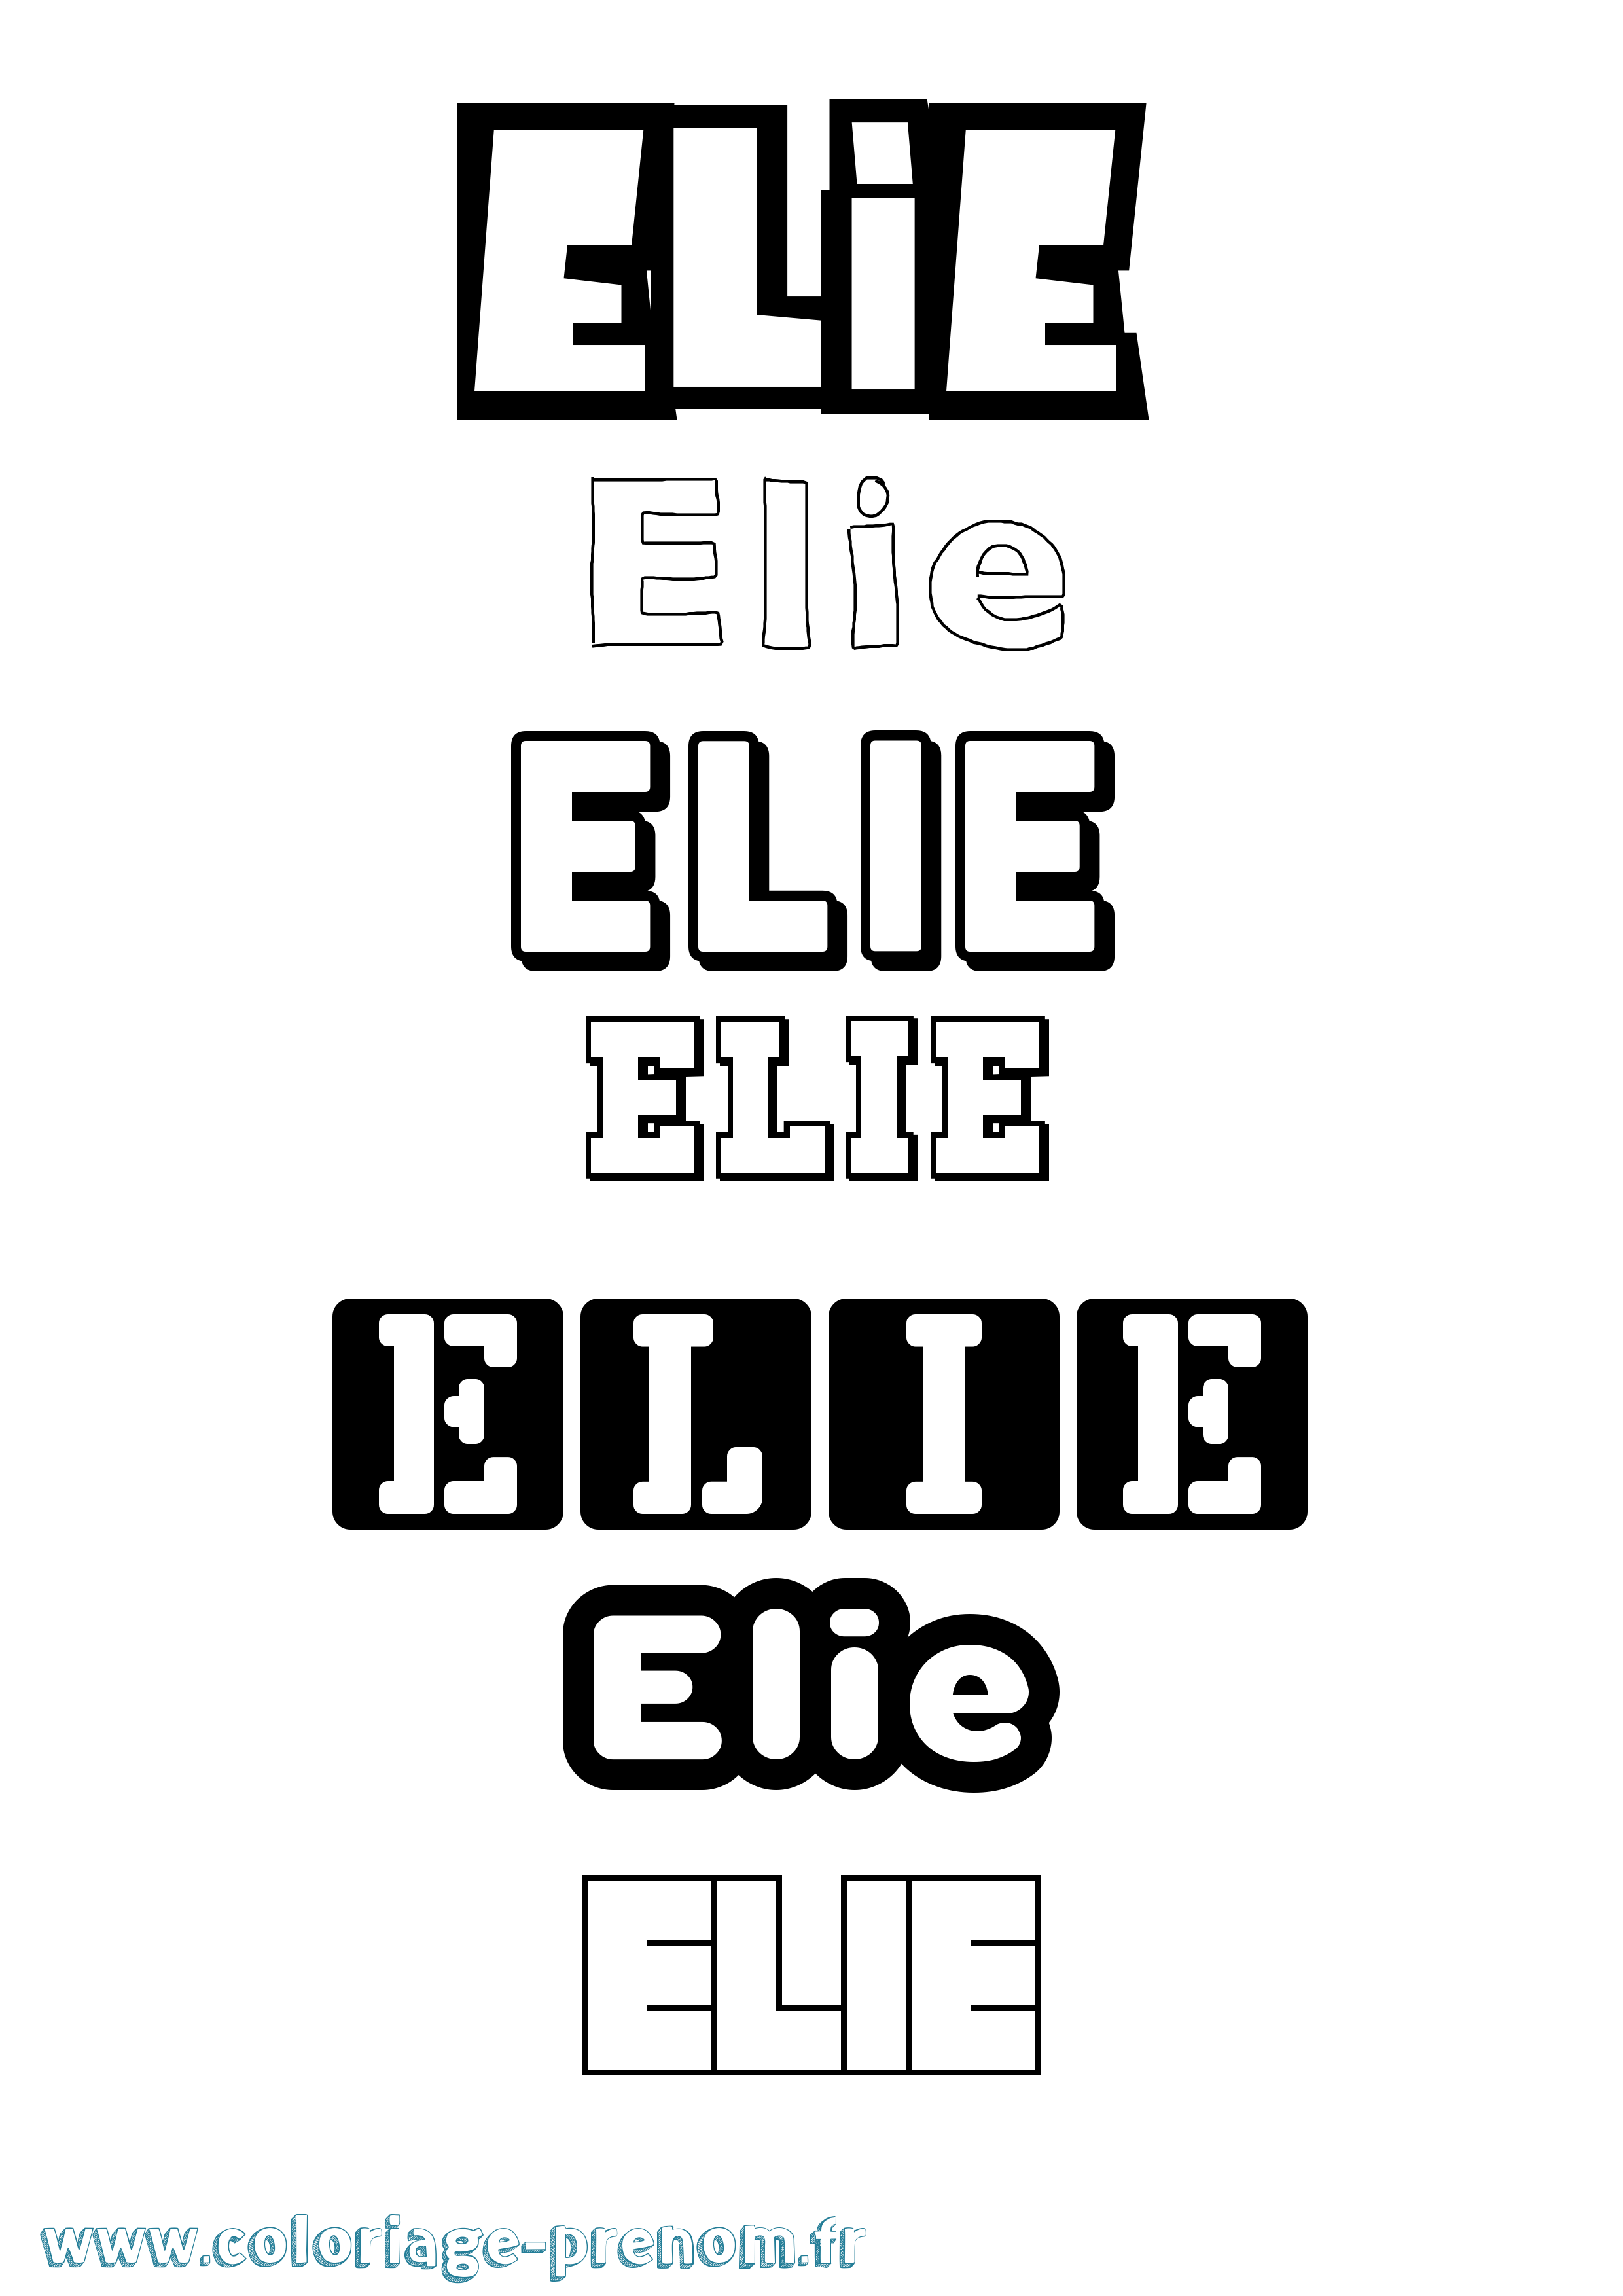 Coloriage prénom Elie Simple